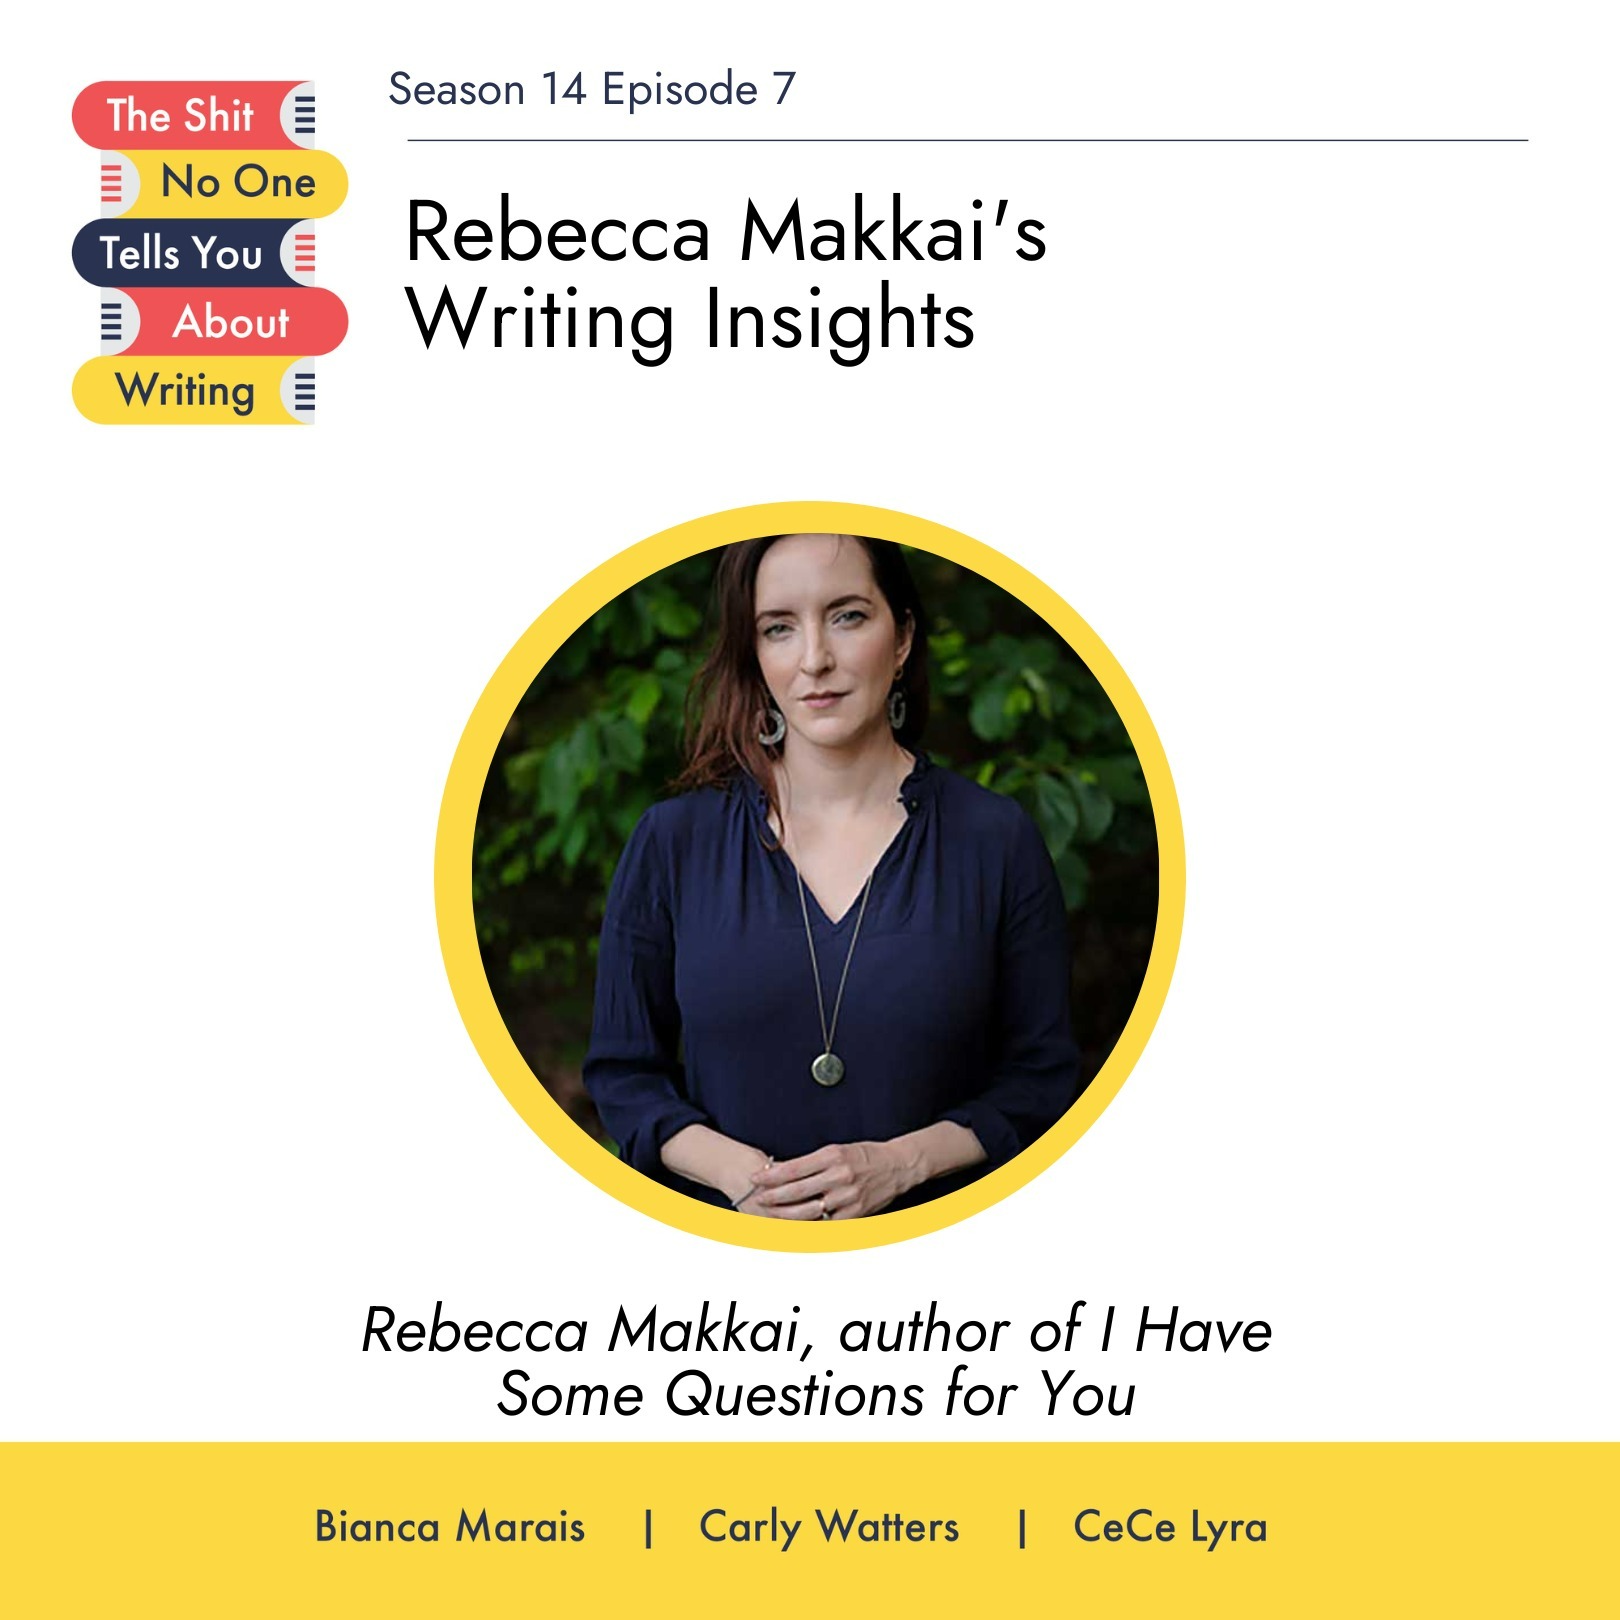 Rebecca Makkai's Writing Insights